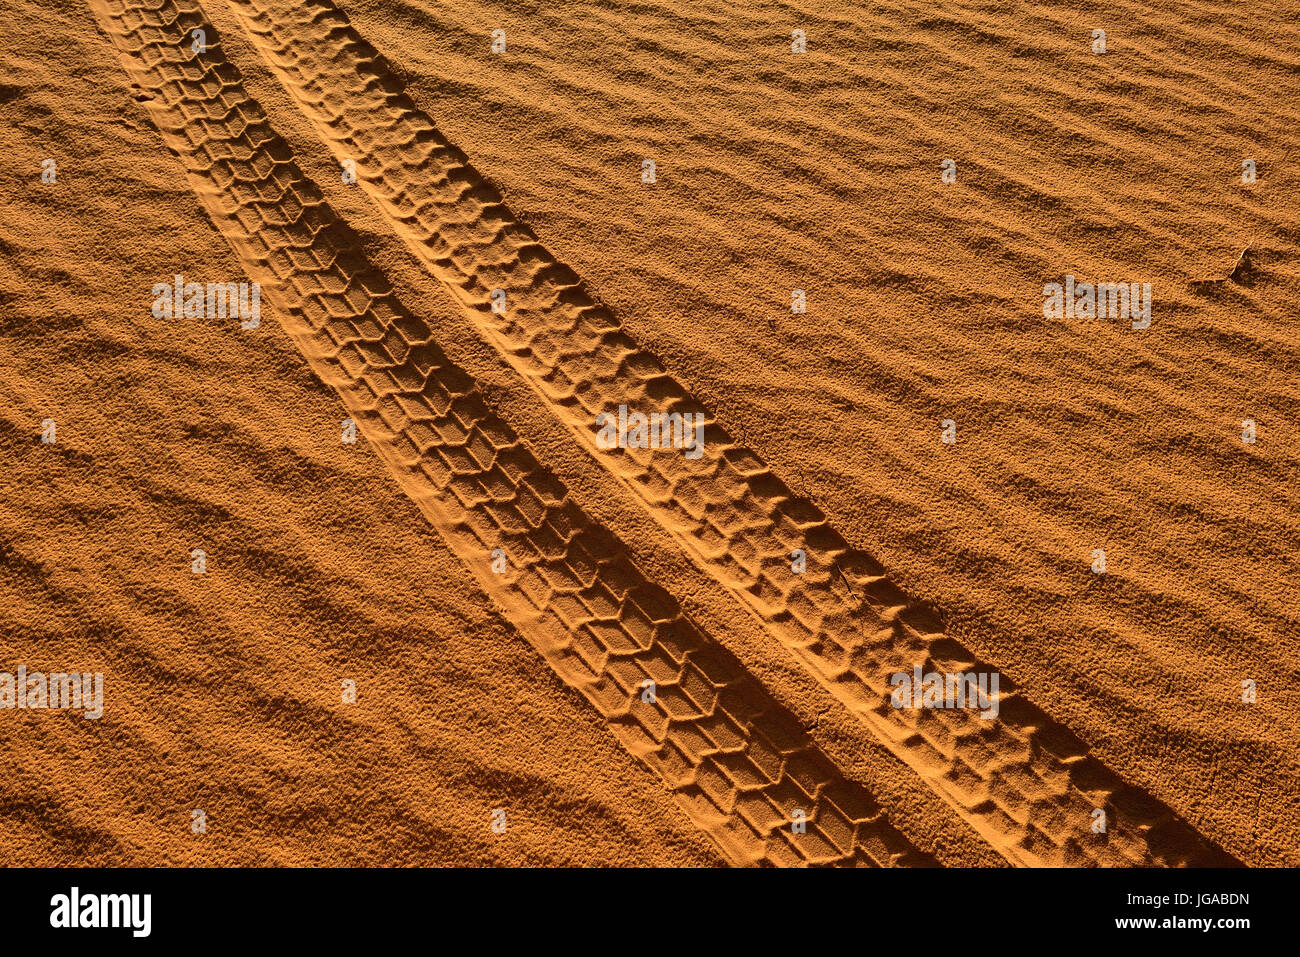 Vehicle tracks on a sand dune, Tassili n'Ajjer National Park, UNESCO World Heritage Site, Sahara desert, Algeria Stock Photo